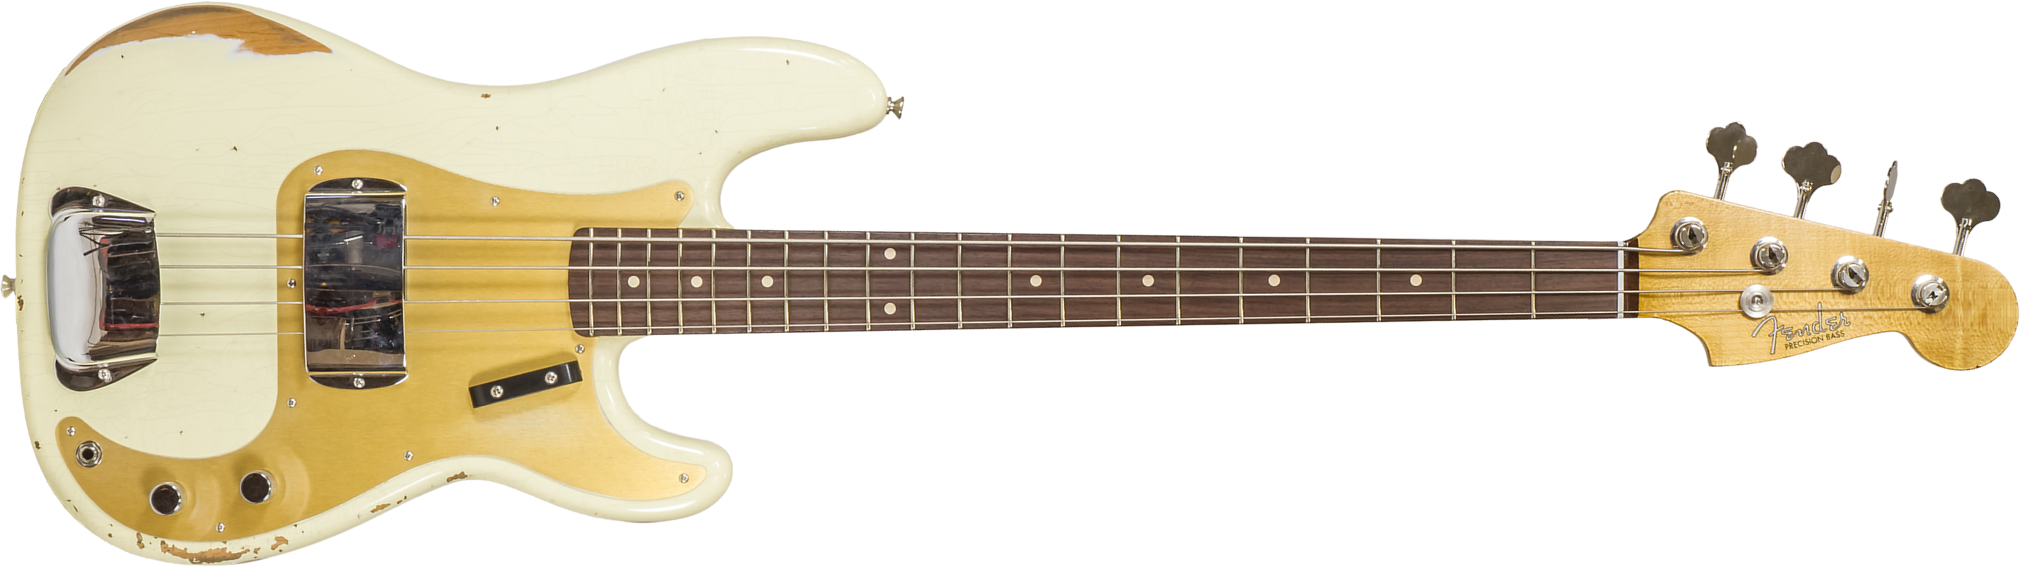 Fender Custom Shop Precision Bass 1960 Rw #r130966 - Closet Classic Vintage White - Solidbody E-bass - Main picture